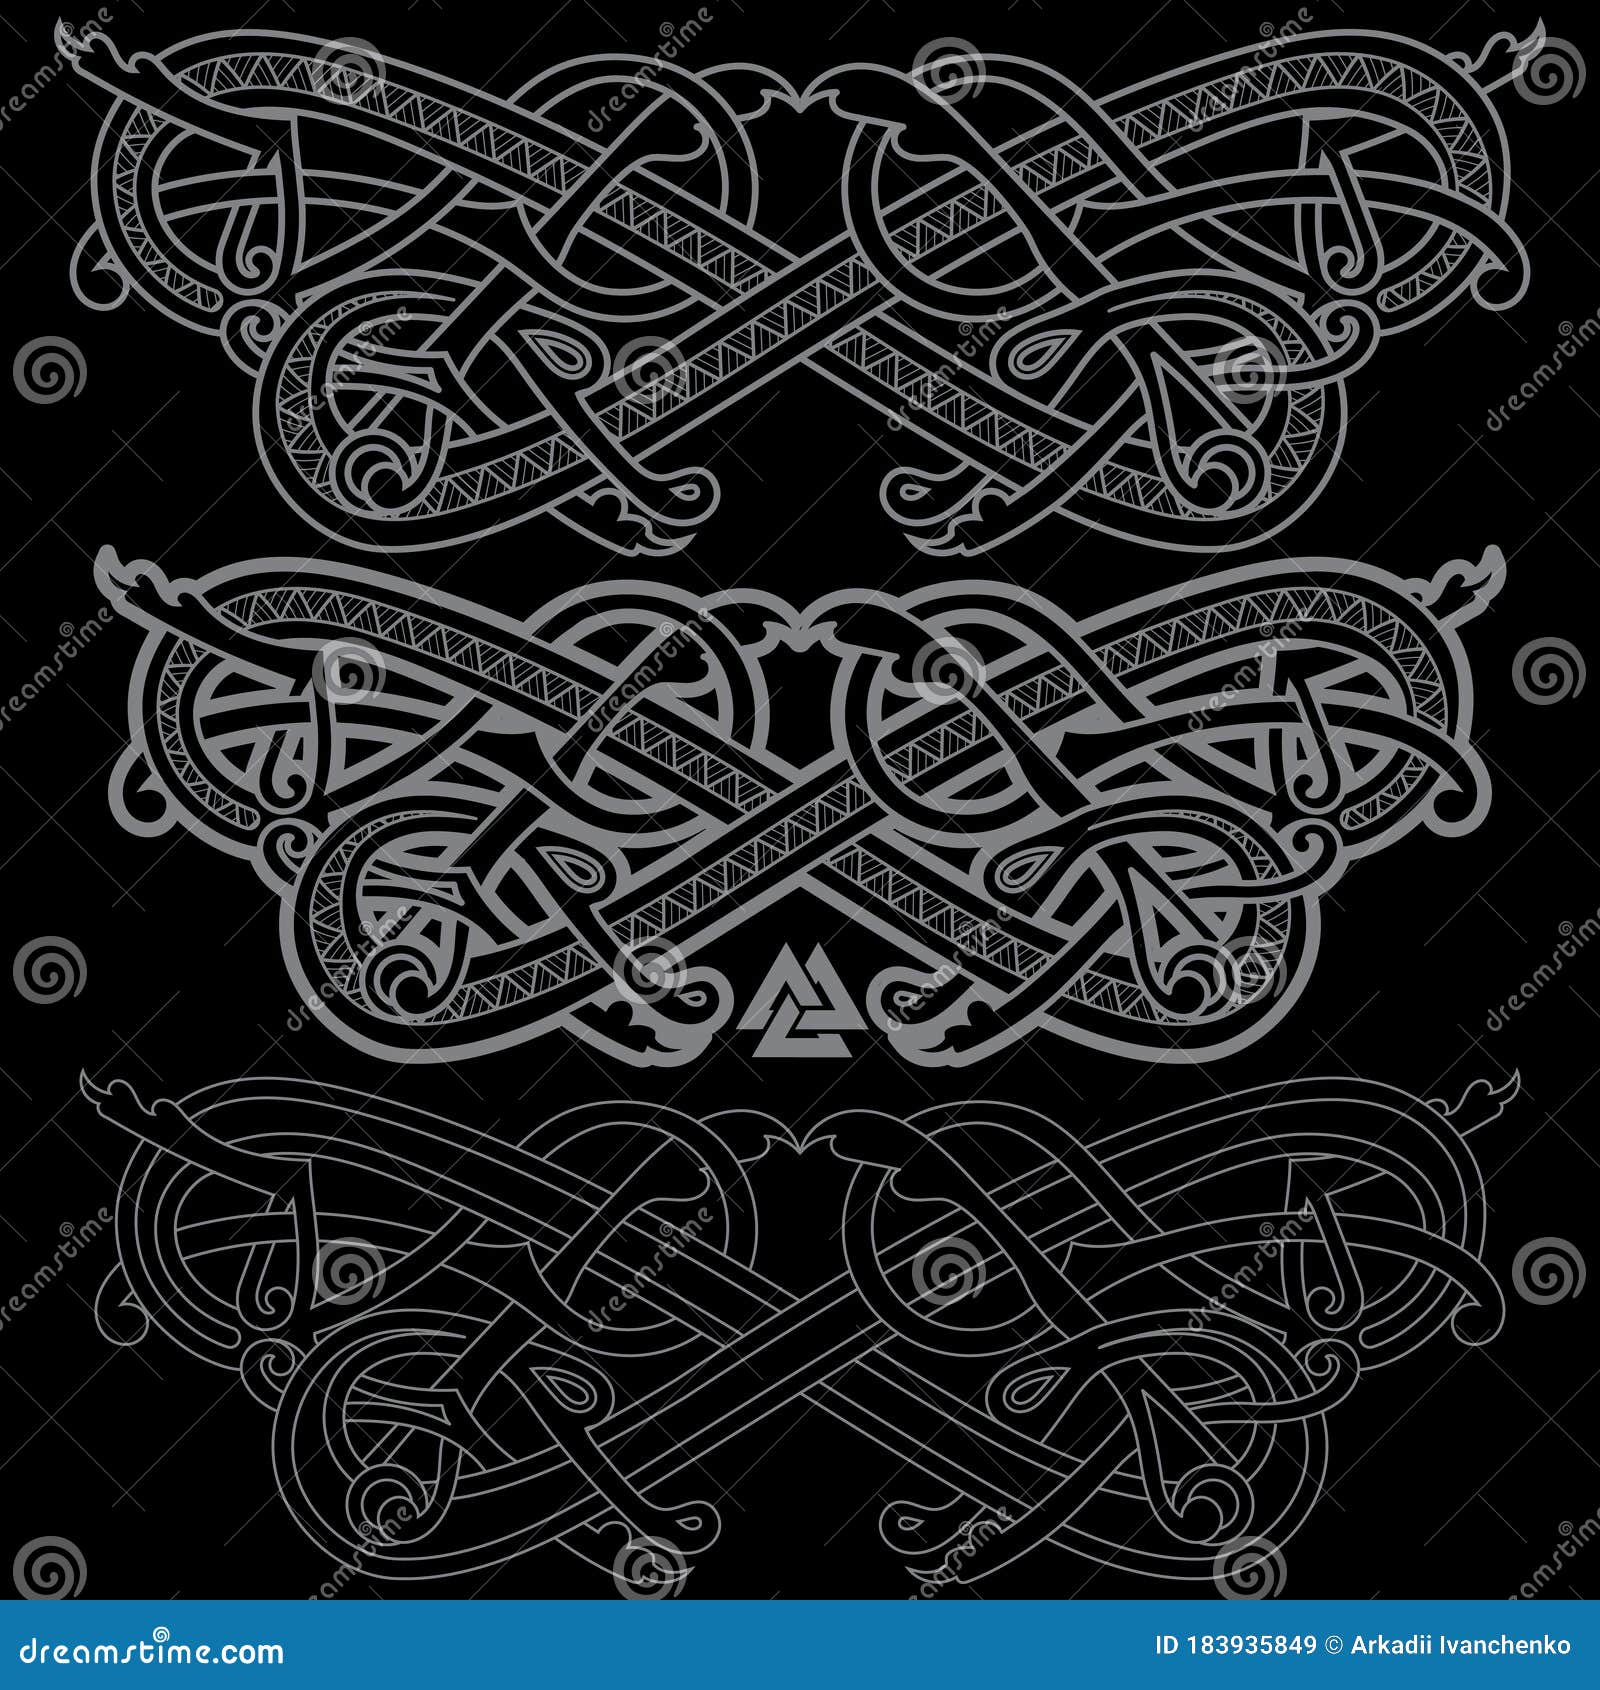 Ancient Celtic, Scandinavian Mythological Symbol of Dragon. Celtic Knot  Ornament Stock Vector - Illustration of tattoo, medieval: 183935849